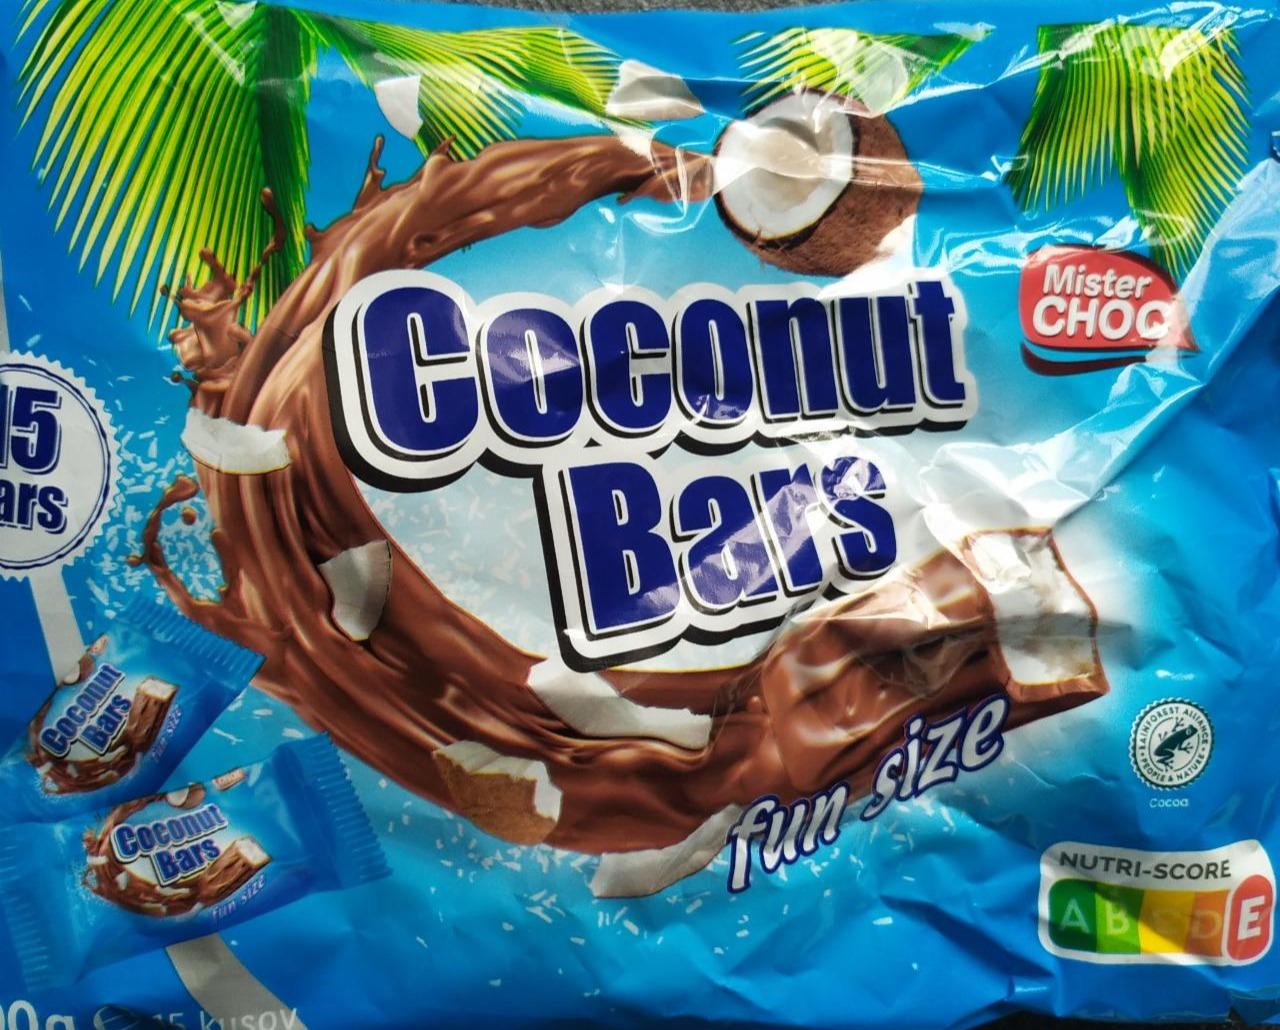 Fotografie - Coconut Bars Mister Choc